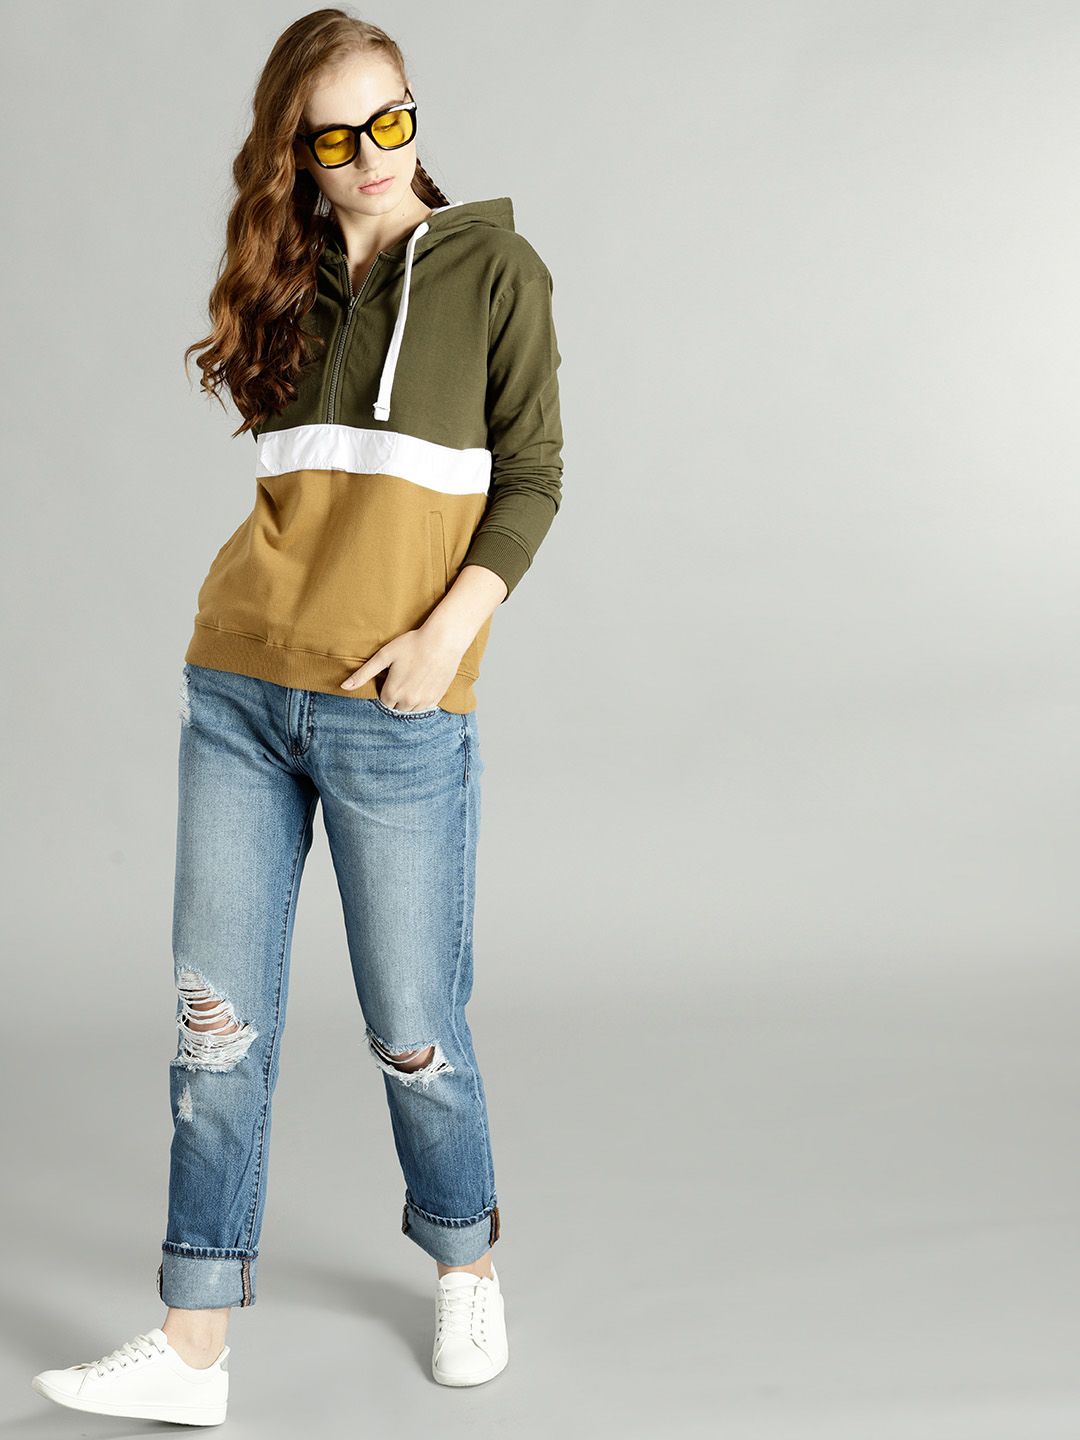 Roadster Women Olive Green & Mustard Brown Colourblocked Hooded Sweatshirt Price in India